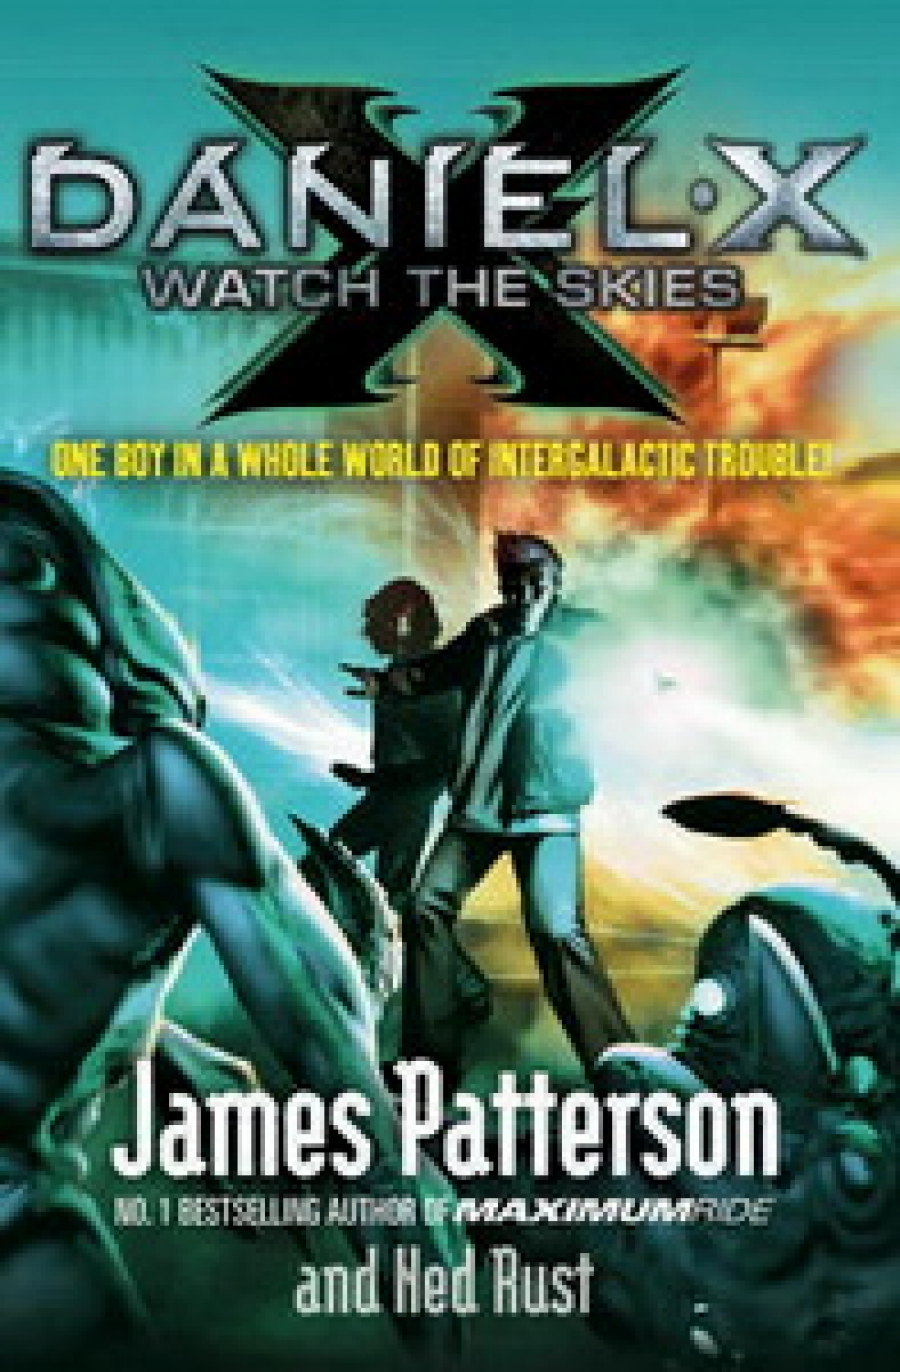 James, Patterson Daniel X: Watch the Skies 